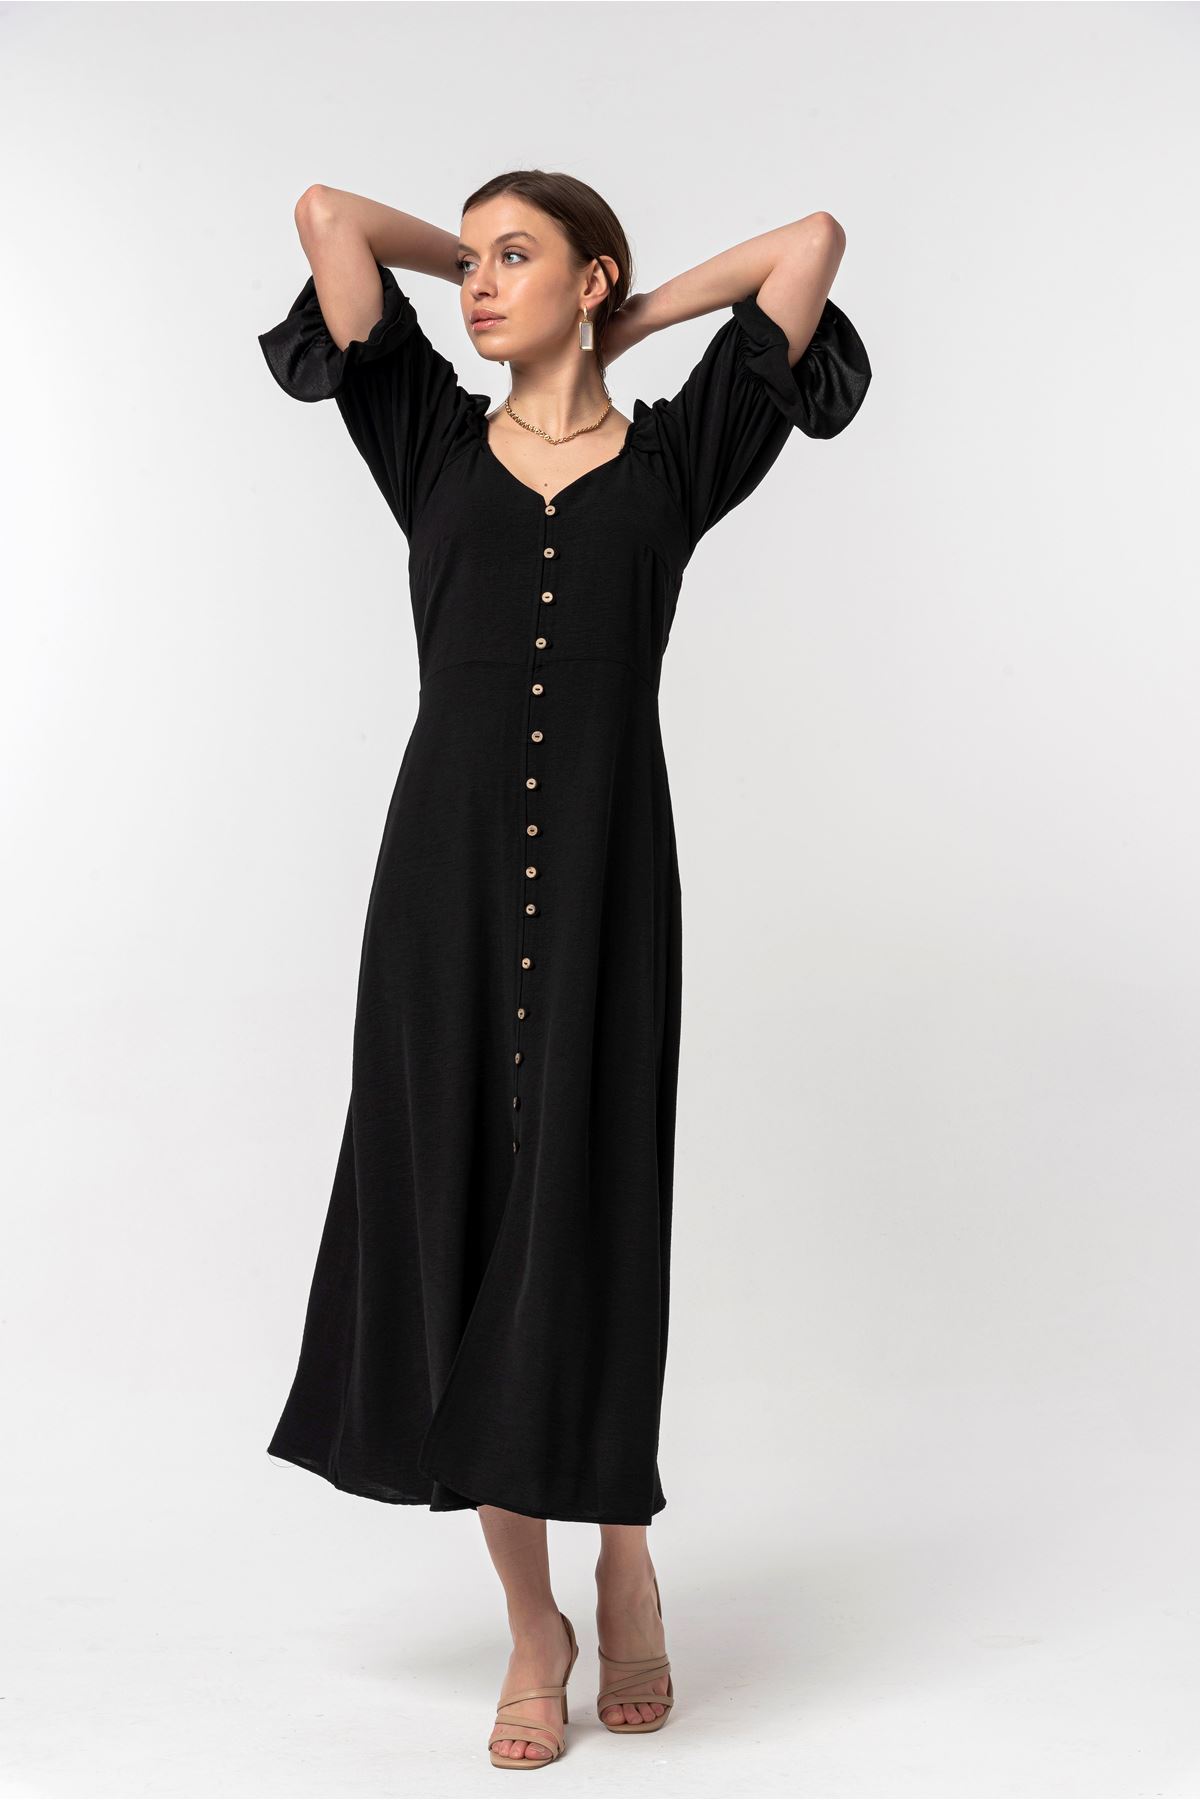 Aerobin Fabric Short Sleeve V-Neck Midi Full Fit Women Dress - Black